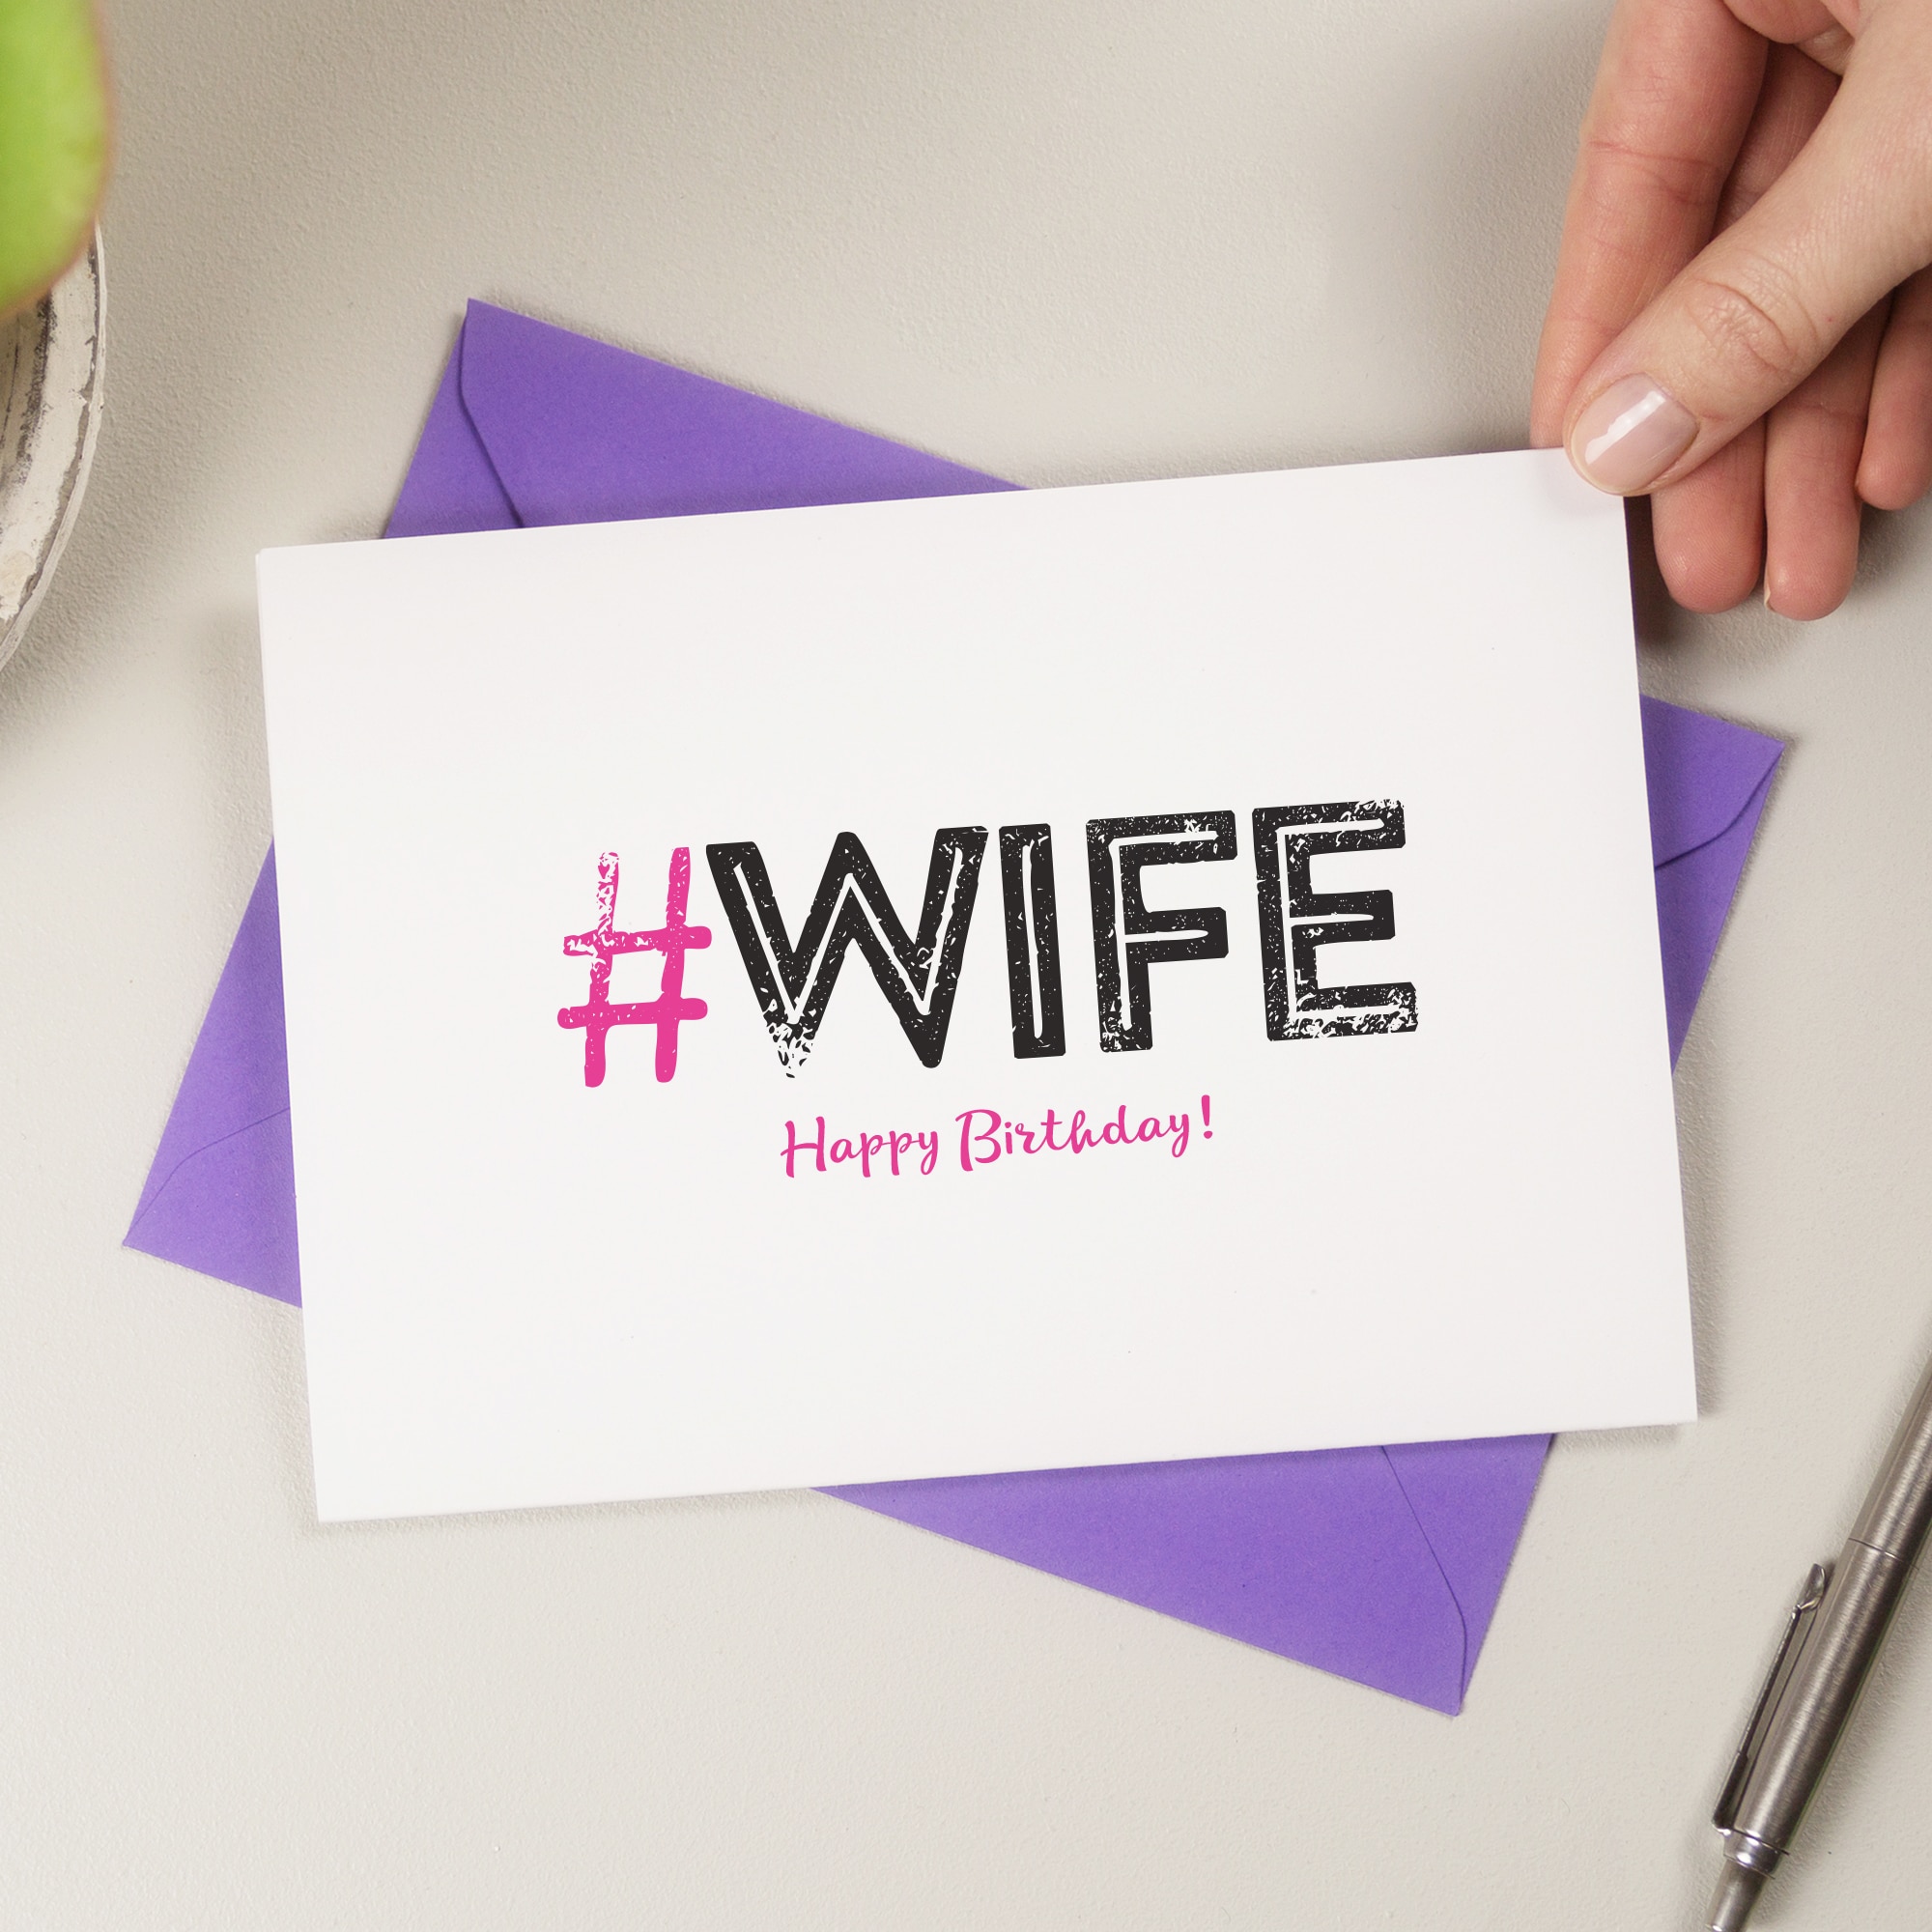 Hashtag wife birthday card